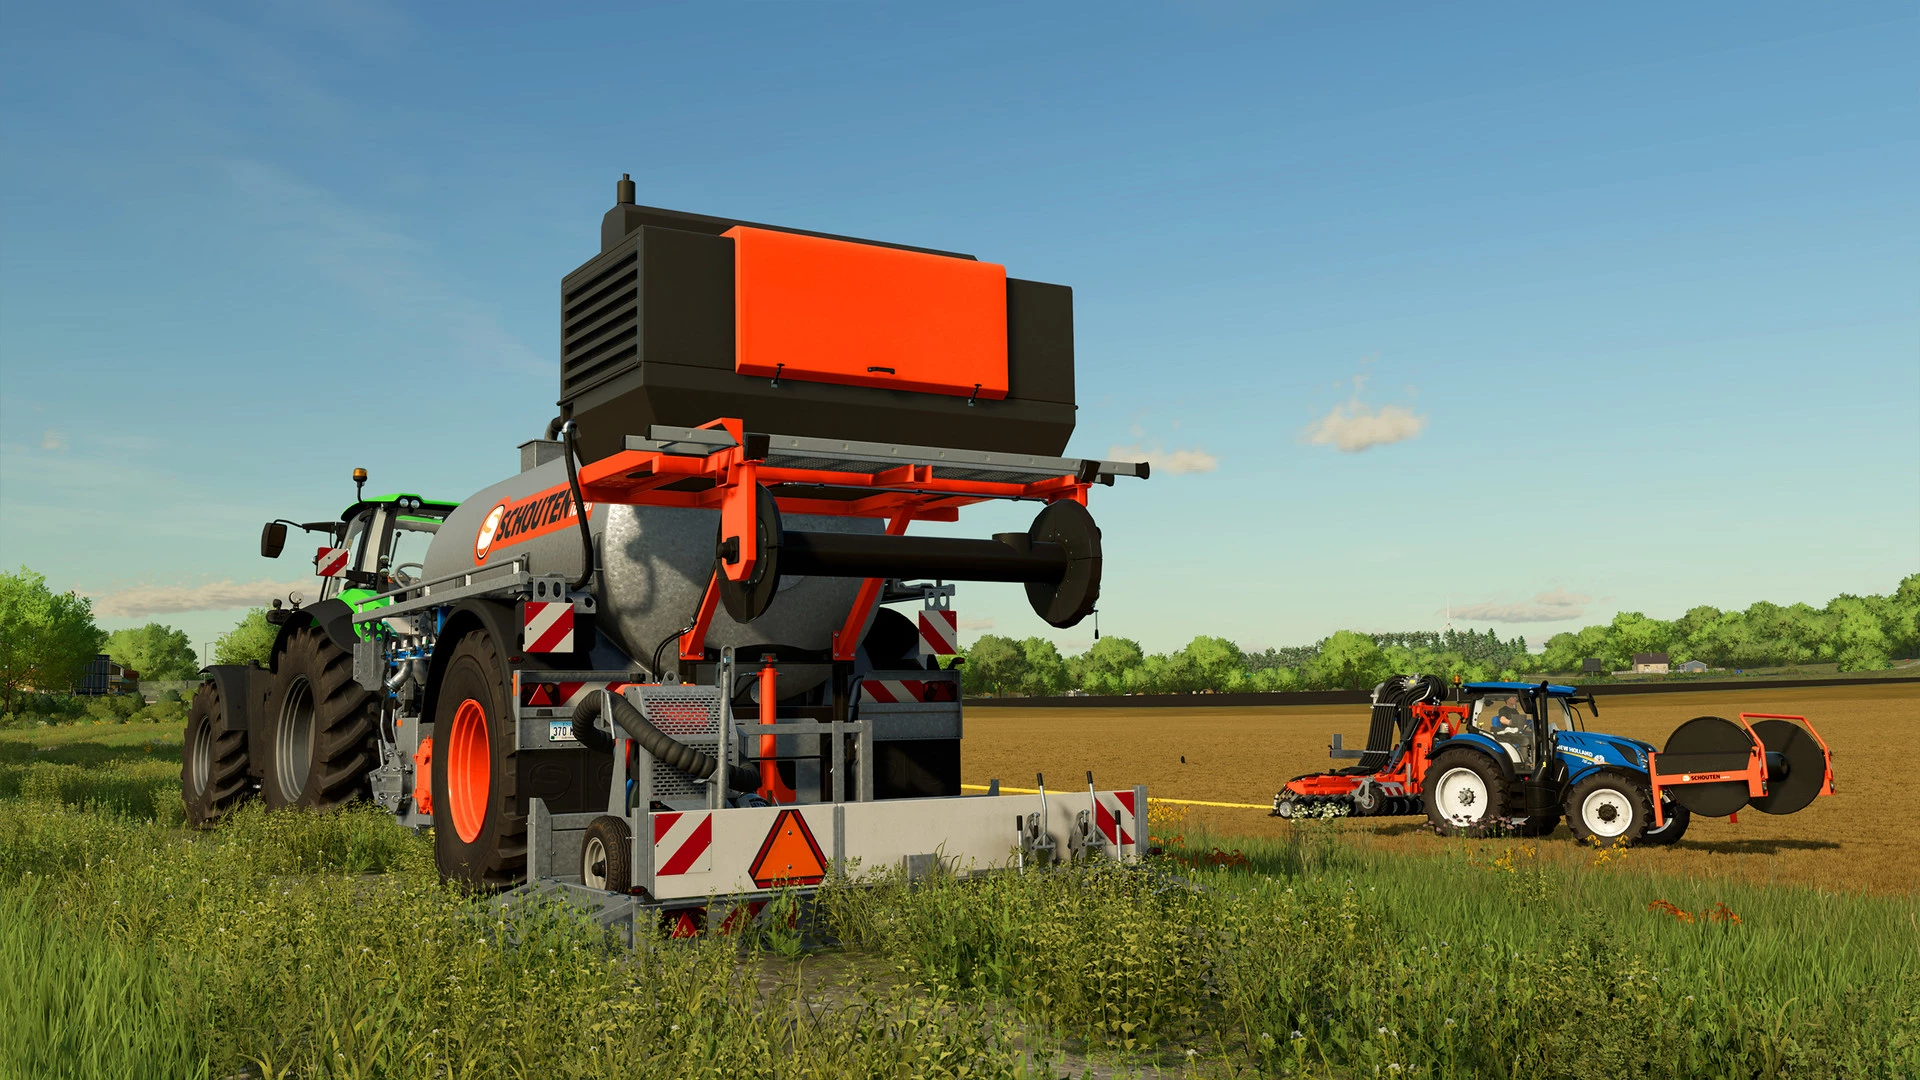 Farming Simulator 22 Pumps n' Hoses Pack (Add-On) voor de PC Gaming kopen op nedgame.nl